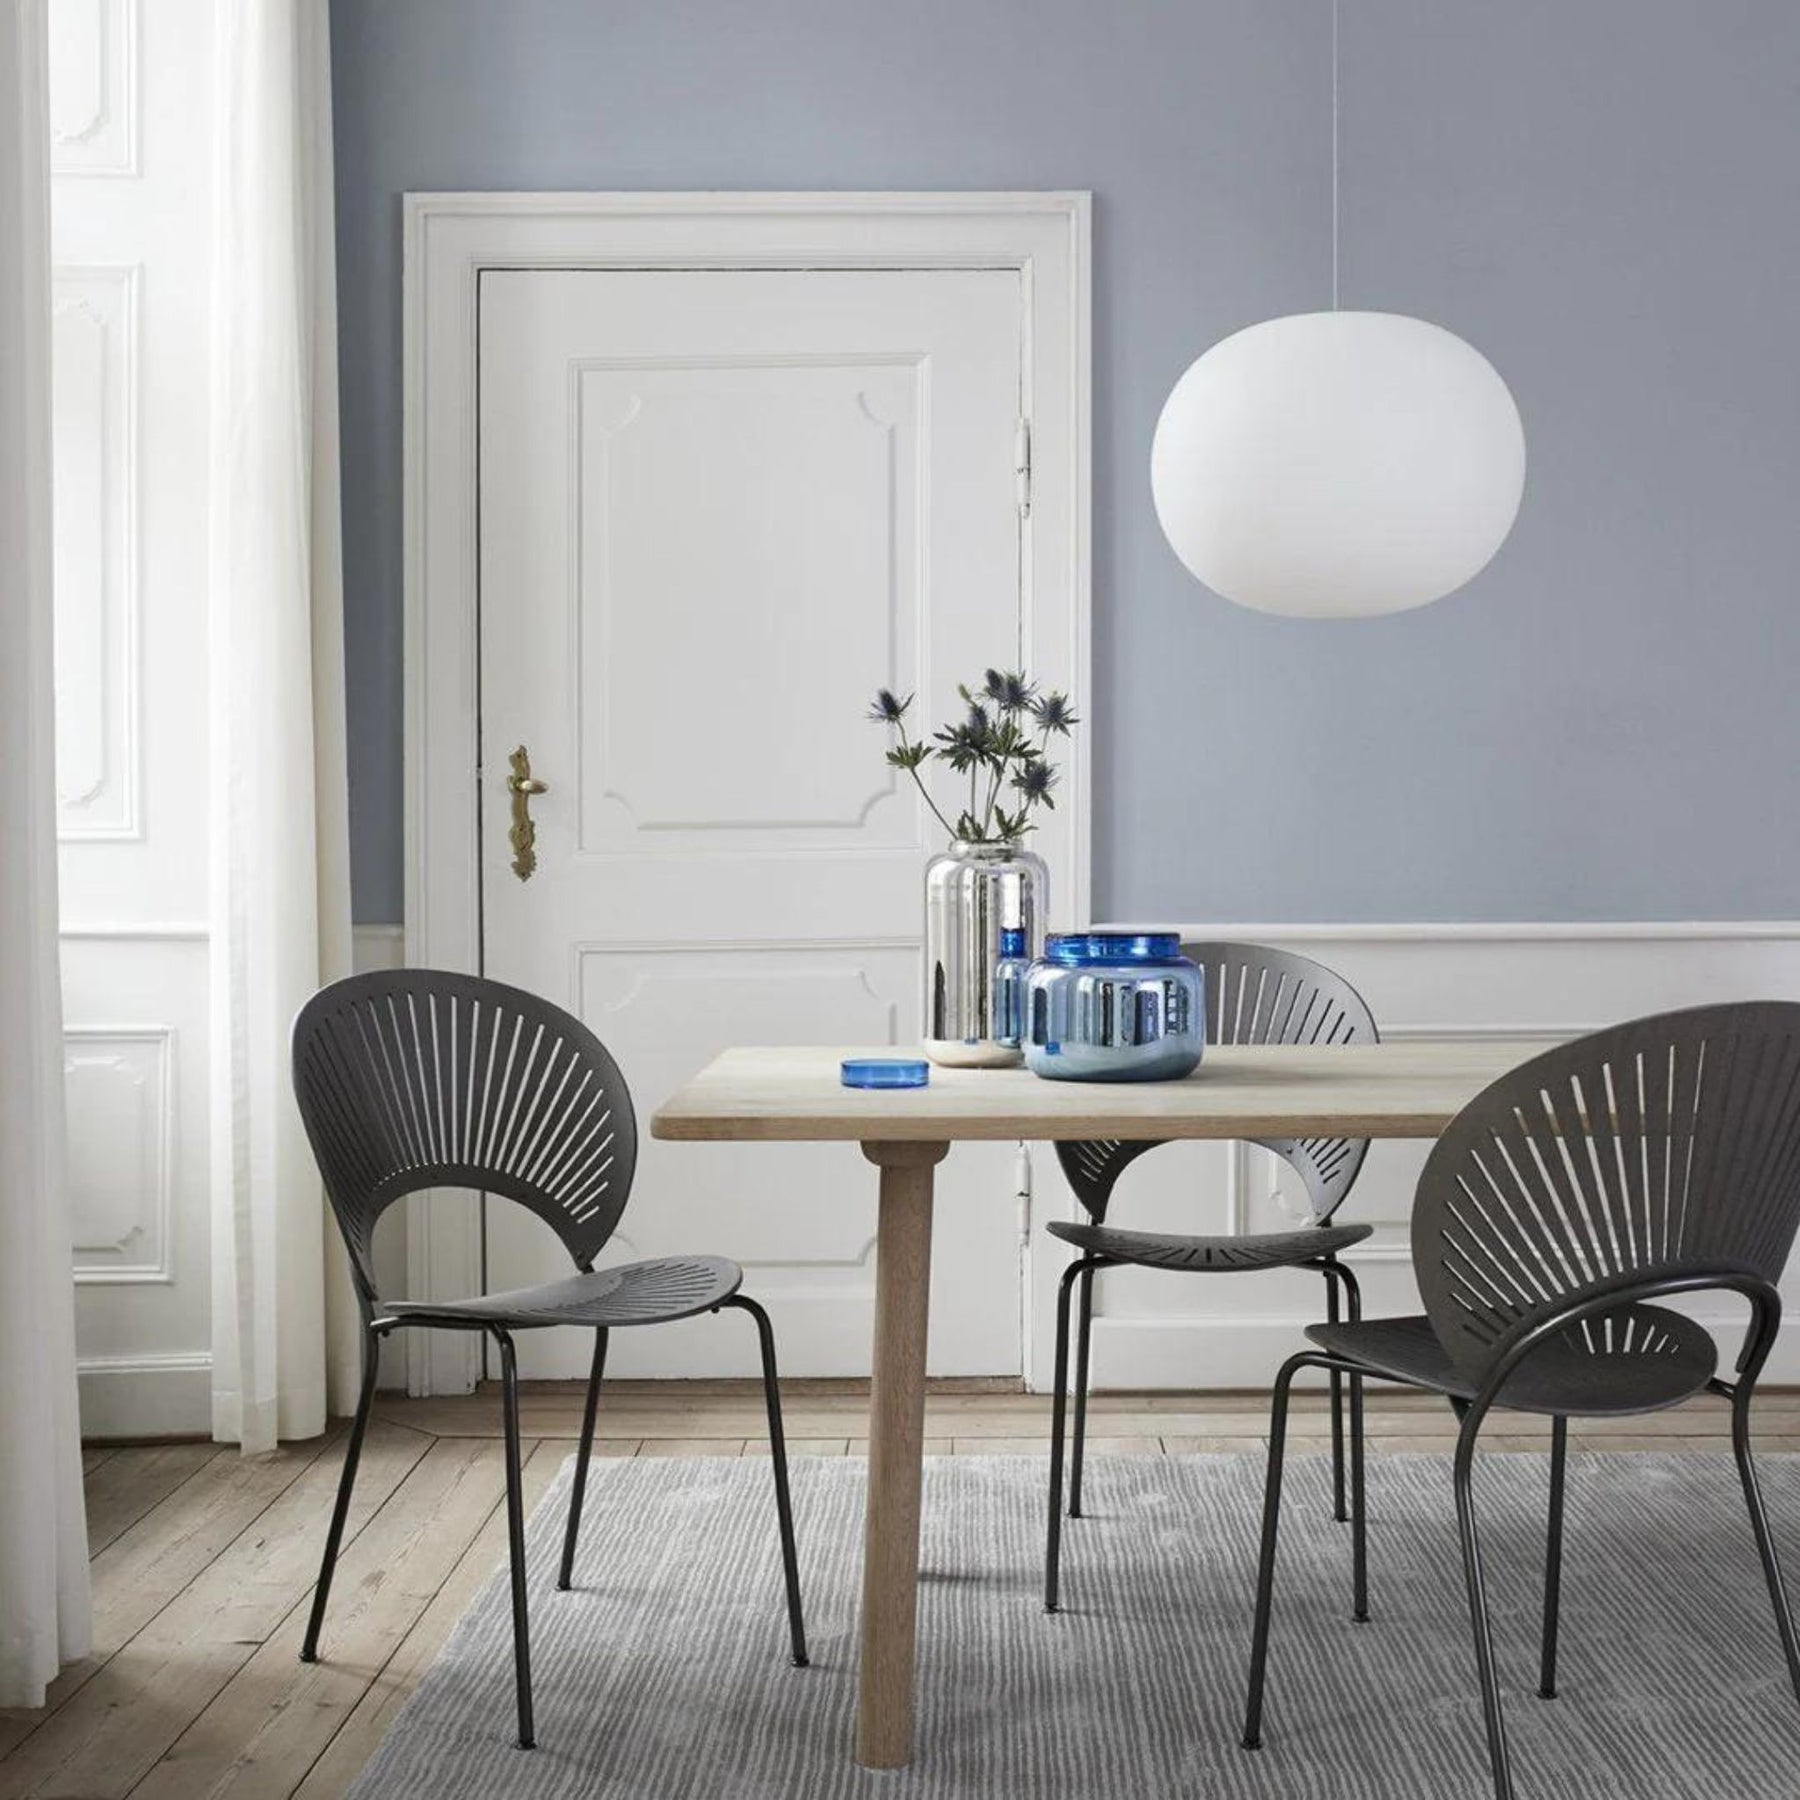 Fredericia Trinidad Chairs in Copenhagen Dining Room